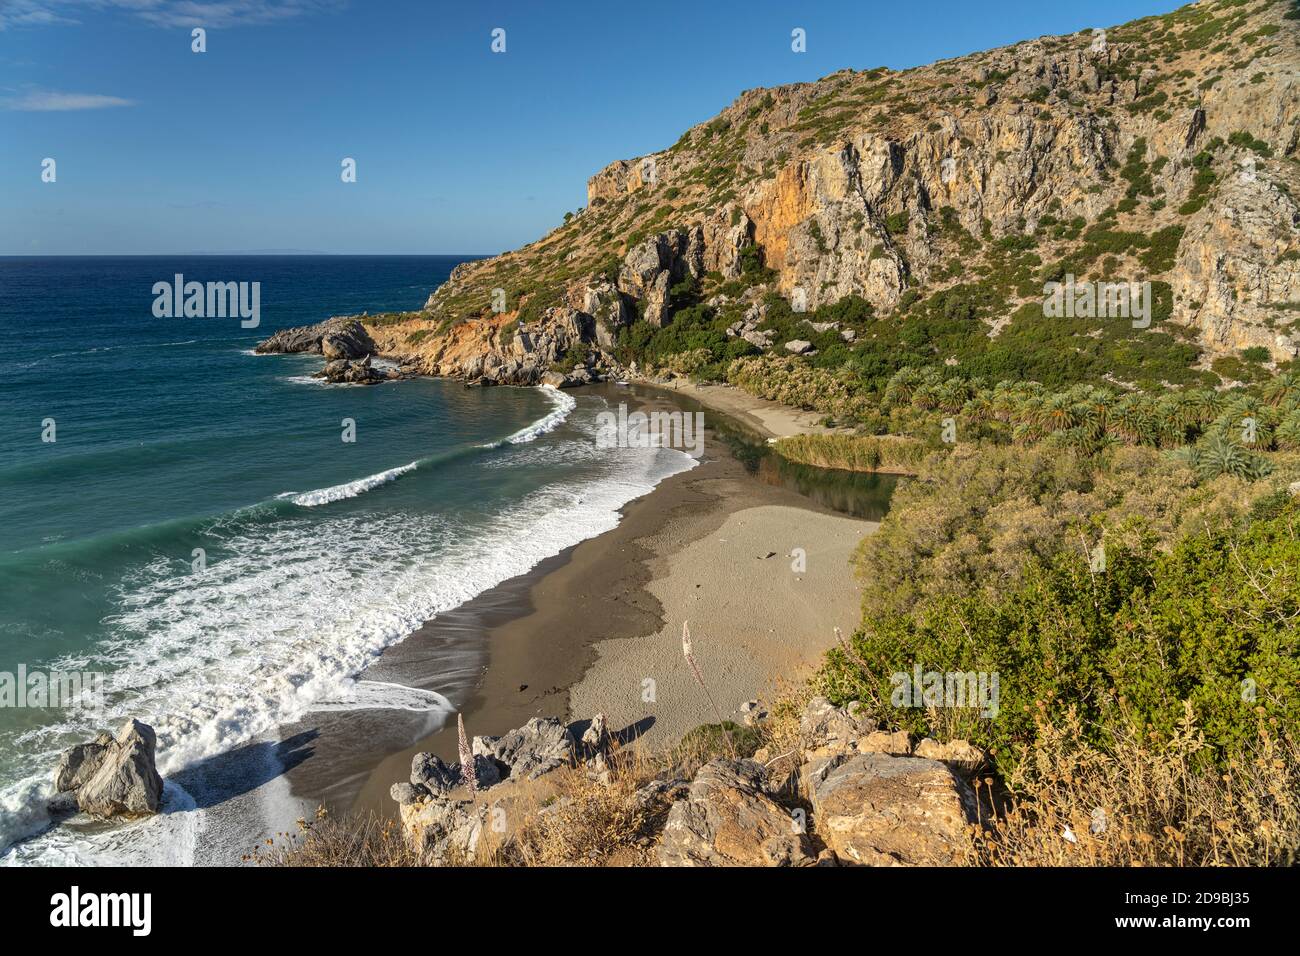 Der Palmenstrand von Preveli, Kreta, Griechenland, Europa | Preveli Palm Beach, Crète, Grèce, Europe Banque D'Images